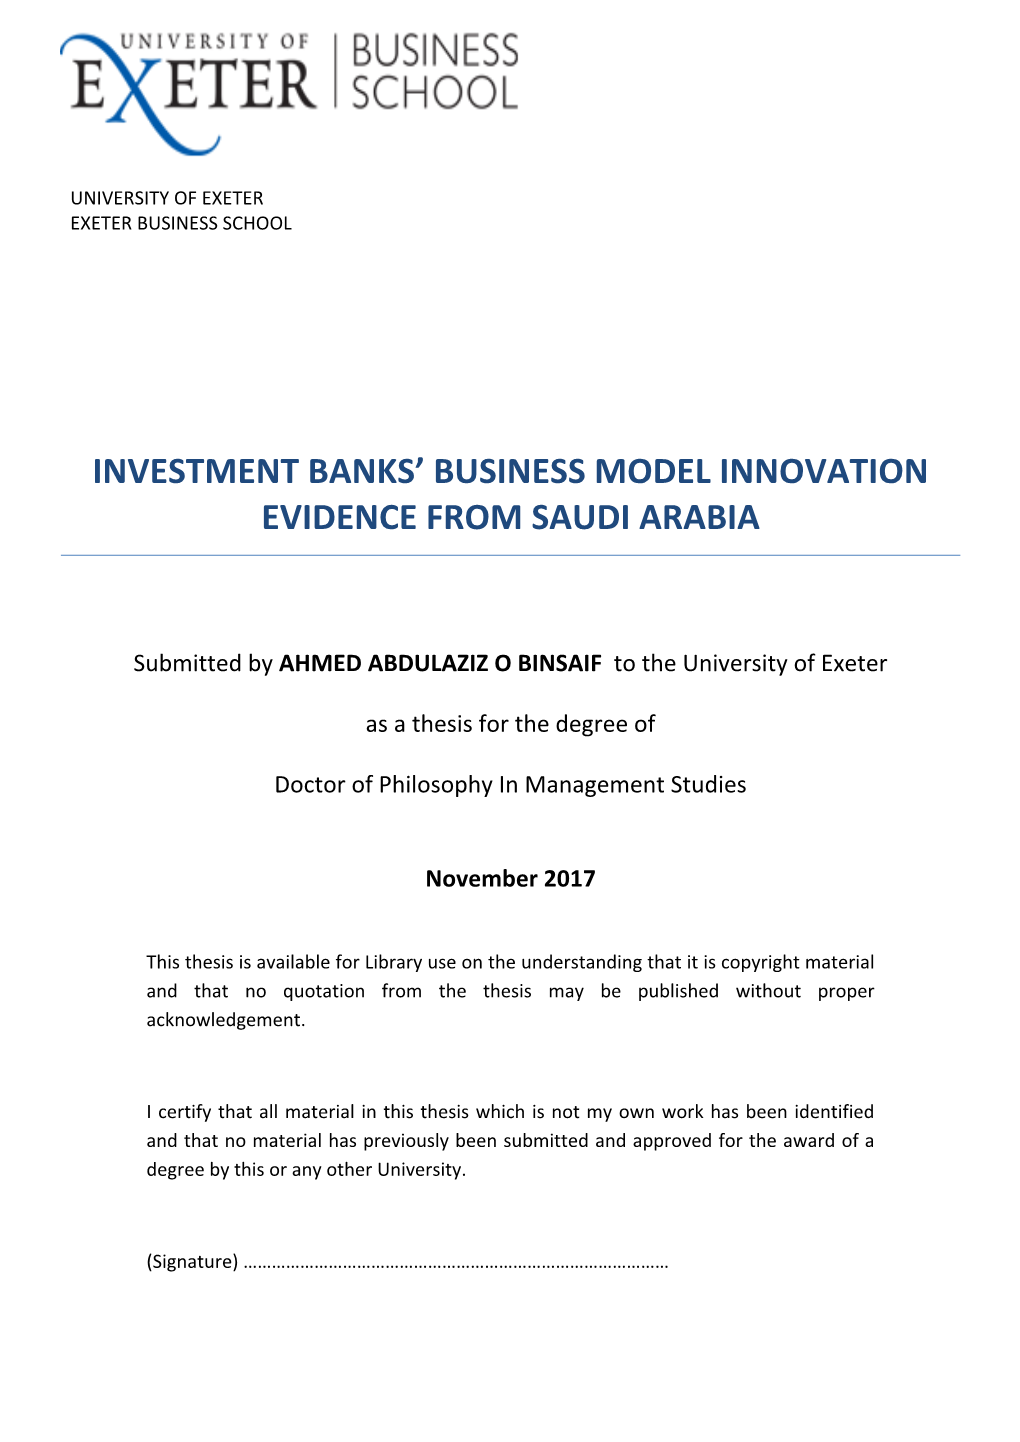 Investment Banks' Business Model Innovation Evidence from Saudi Arabia